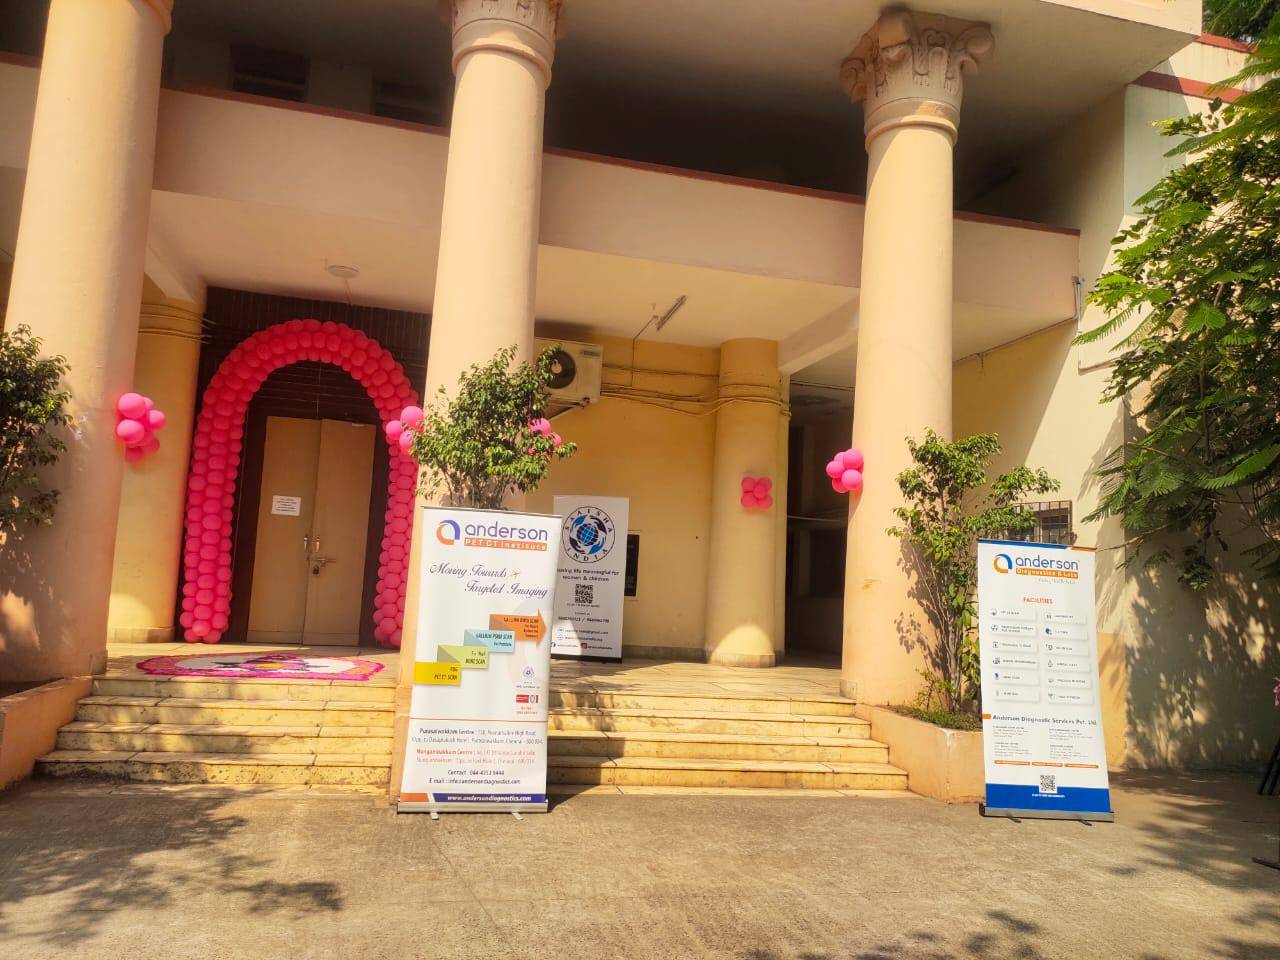 The decorated entrance of the Seminar Hall at Rajiv Gandhi General Hospital.